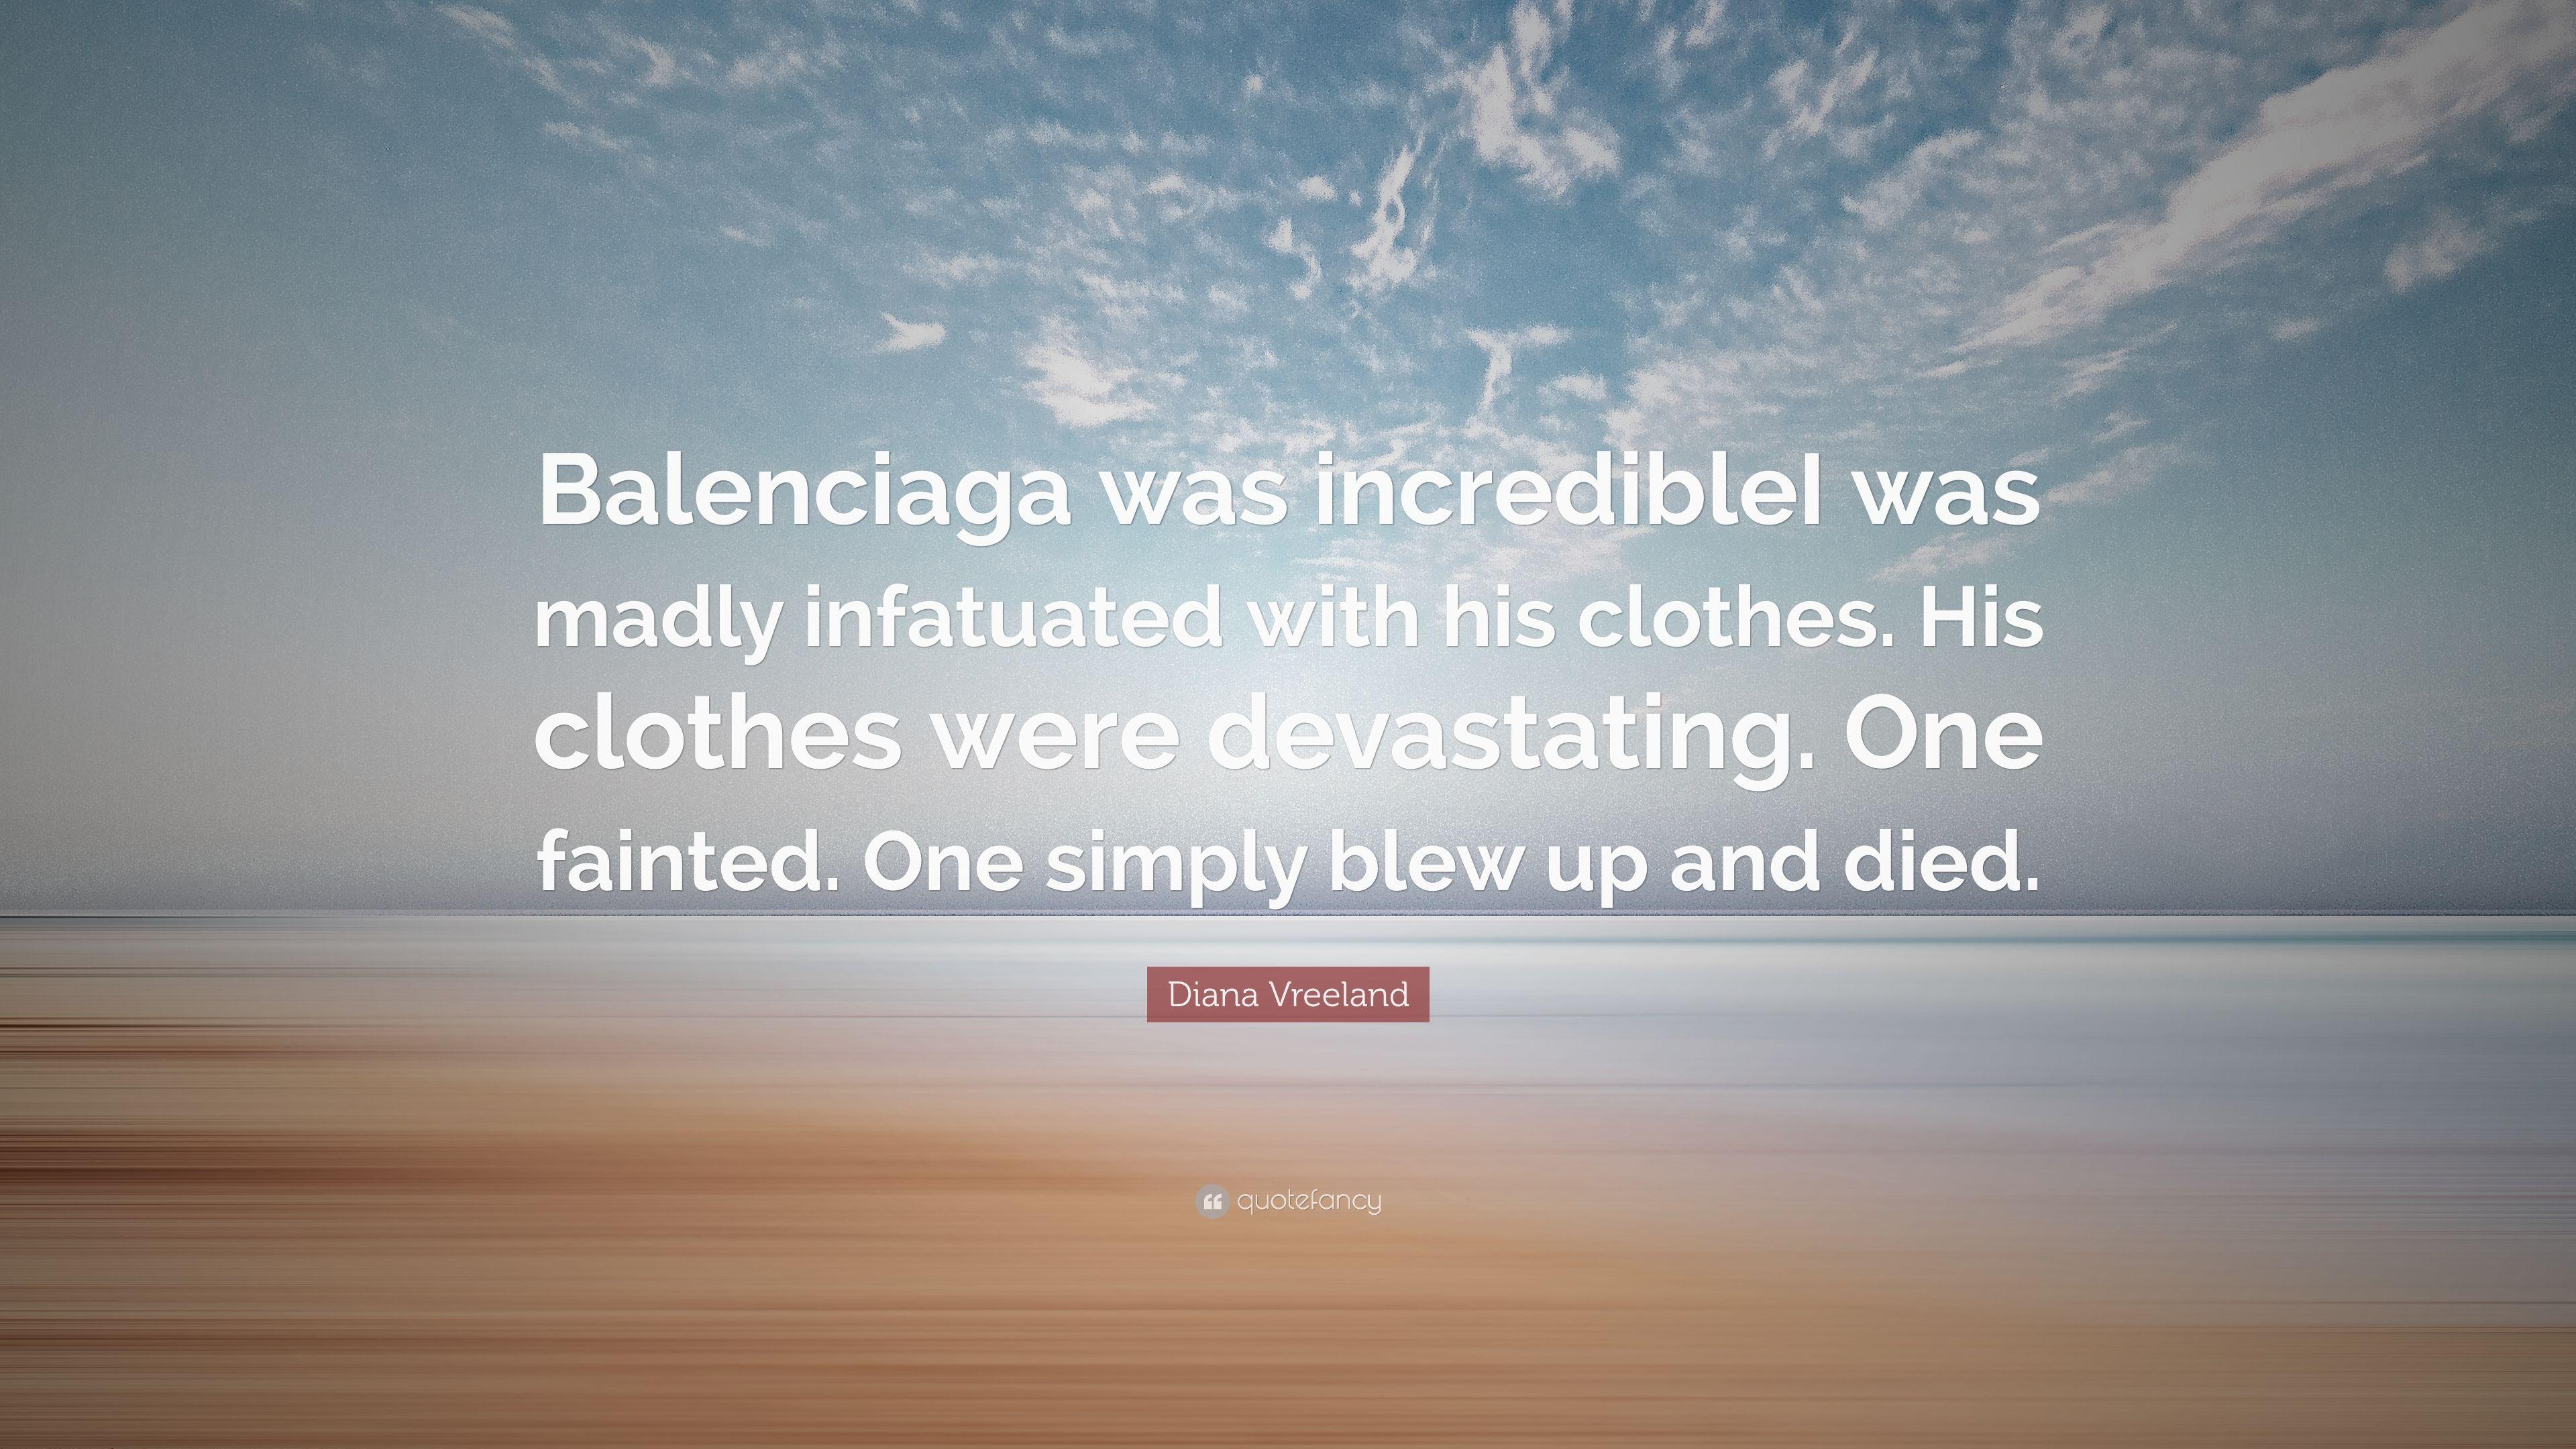 Diana Vreeland Quote: “Balenciaga was incredibleI was madly